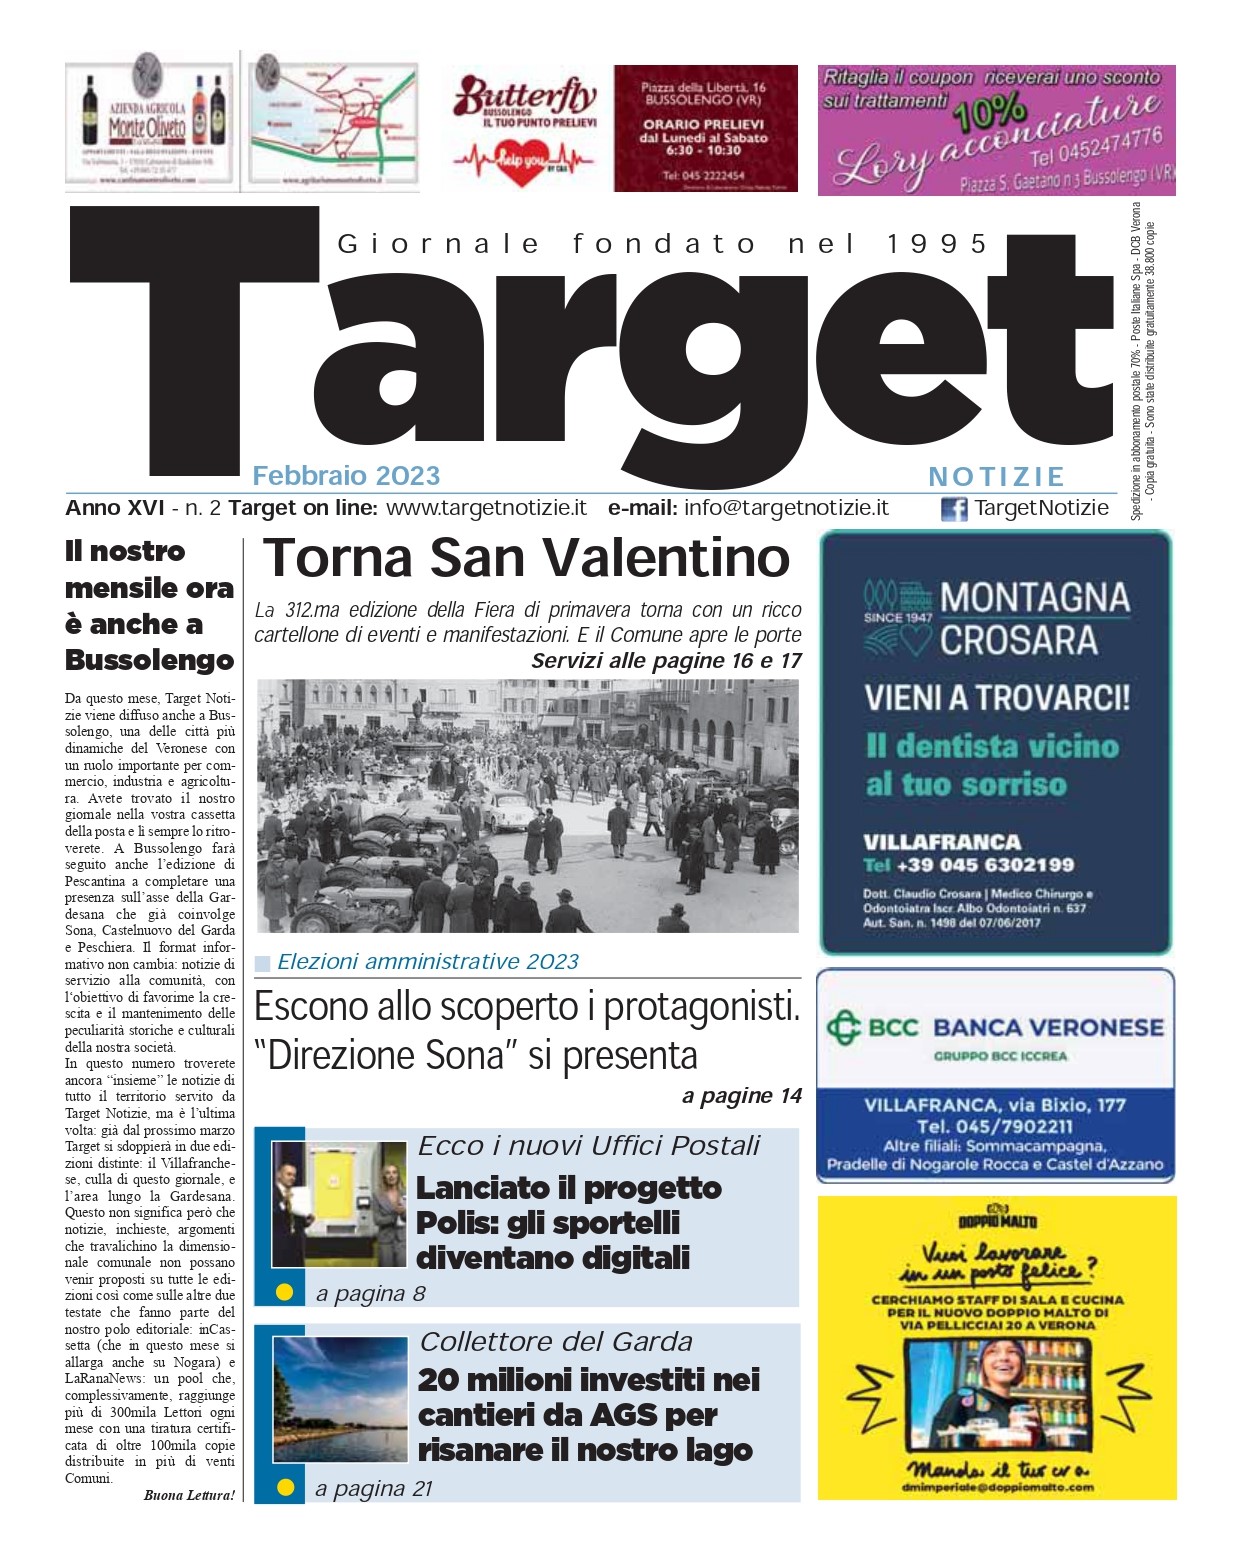 Target Notizie: debutta a Bussolengo il nostro freepress